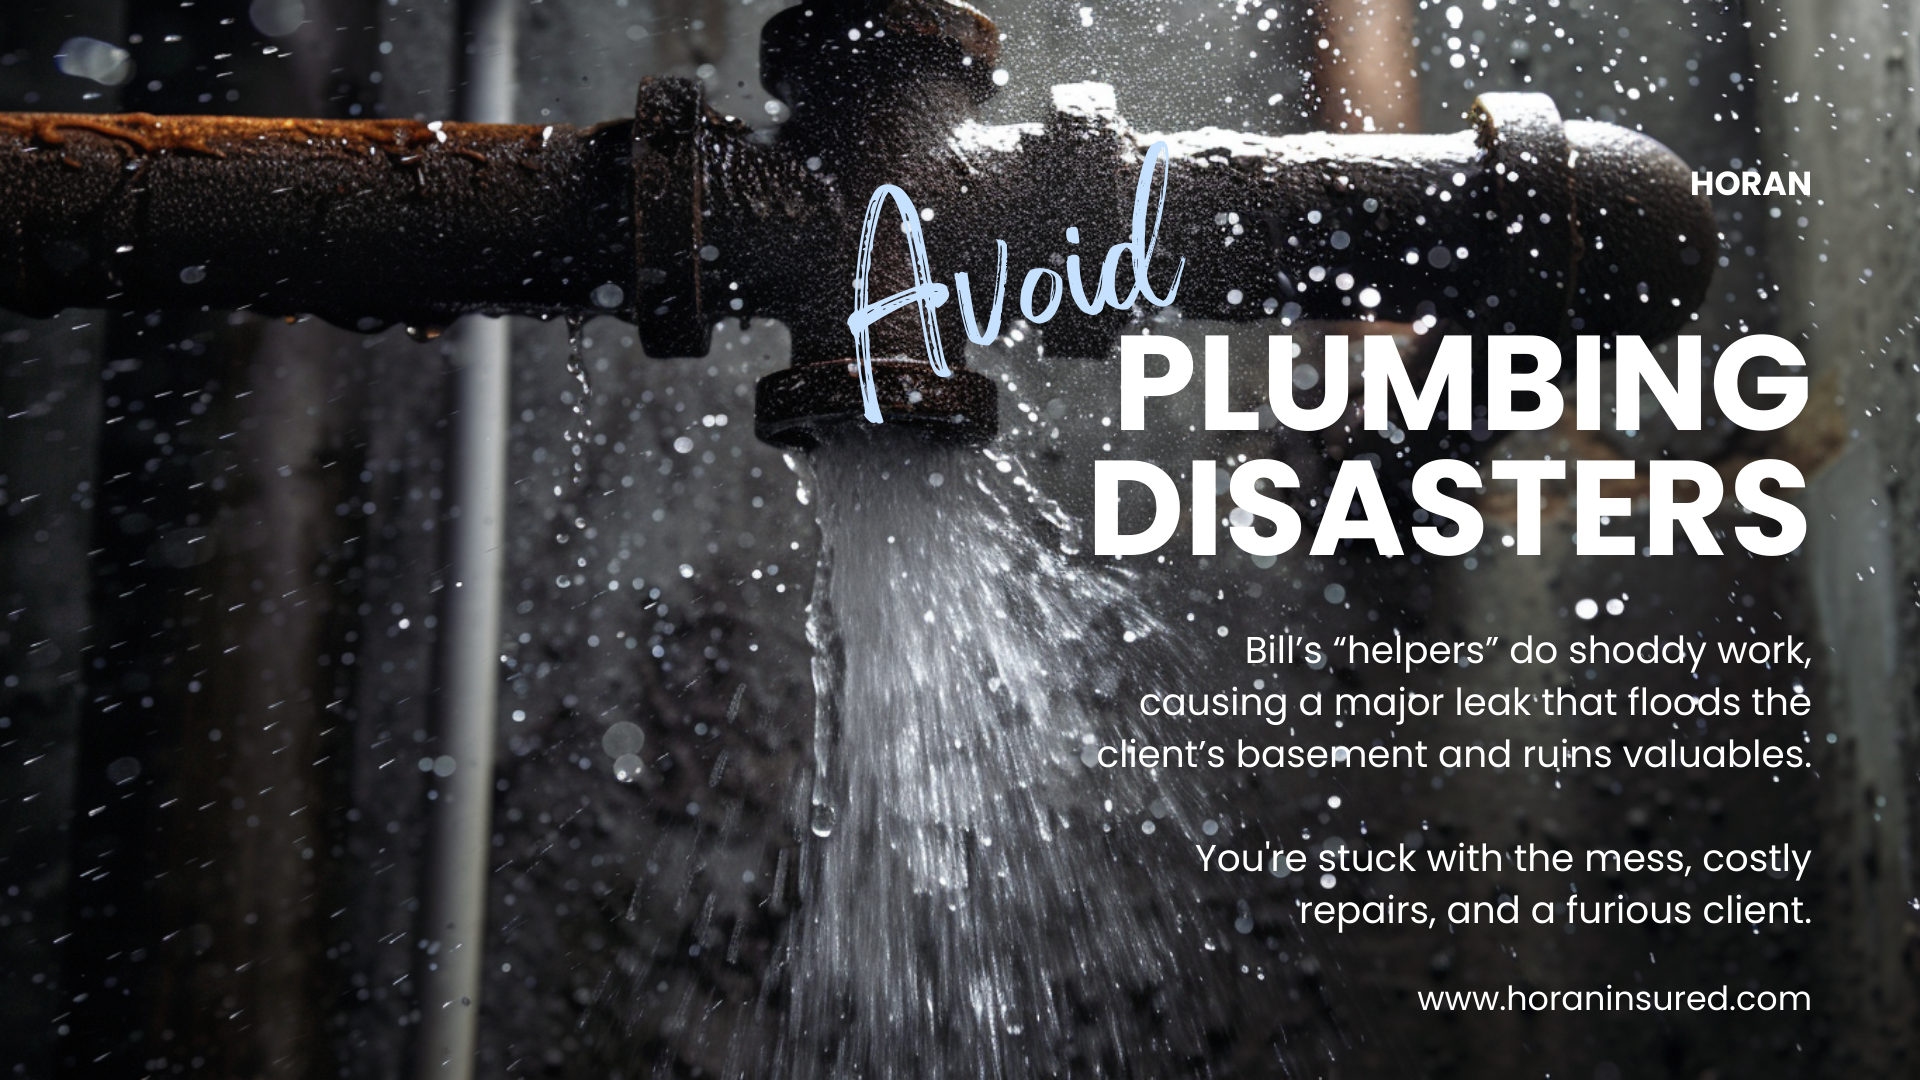 Avoid subcontracting nightmares like plumbing disasters.